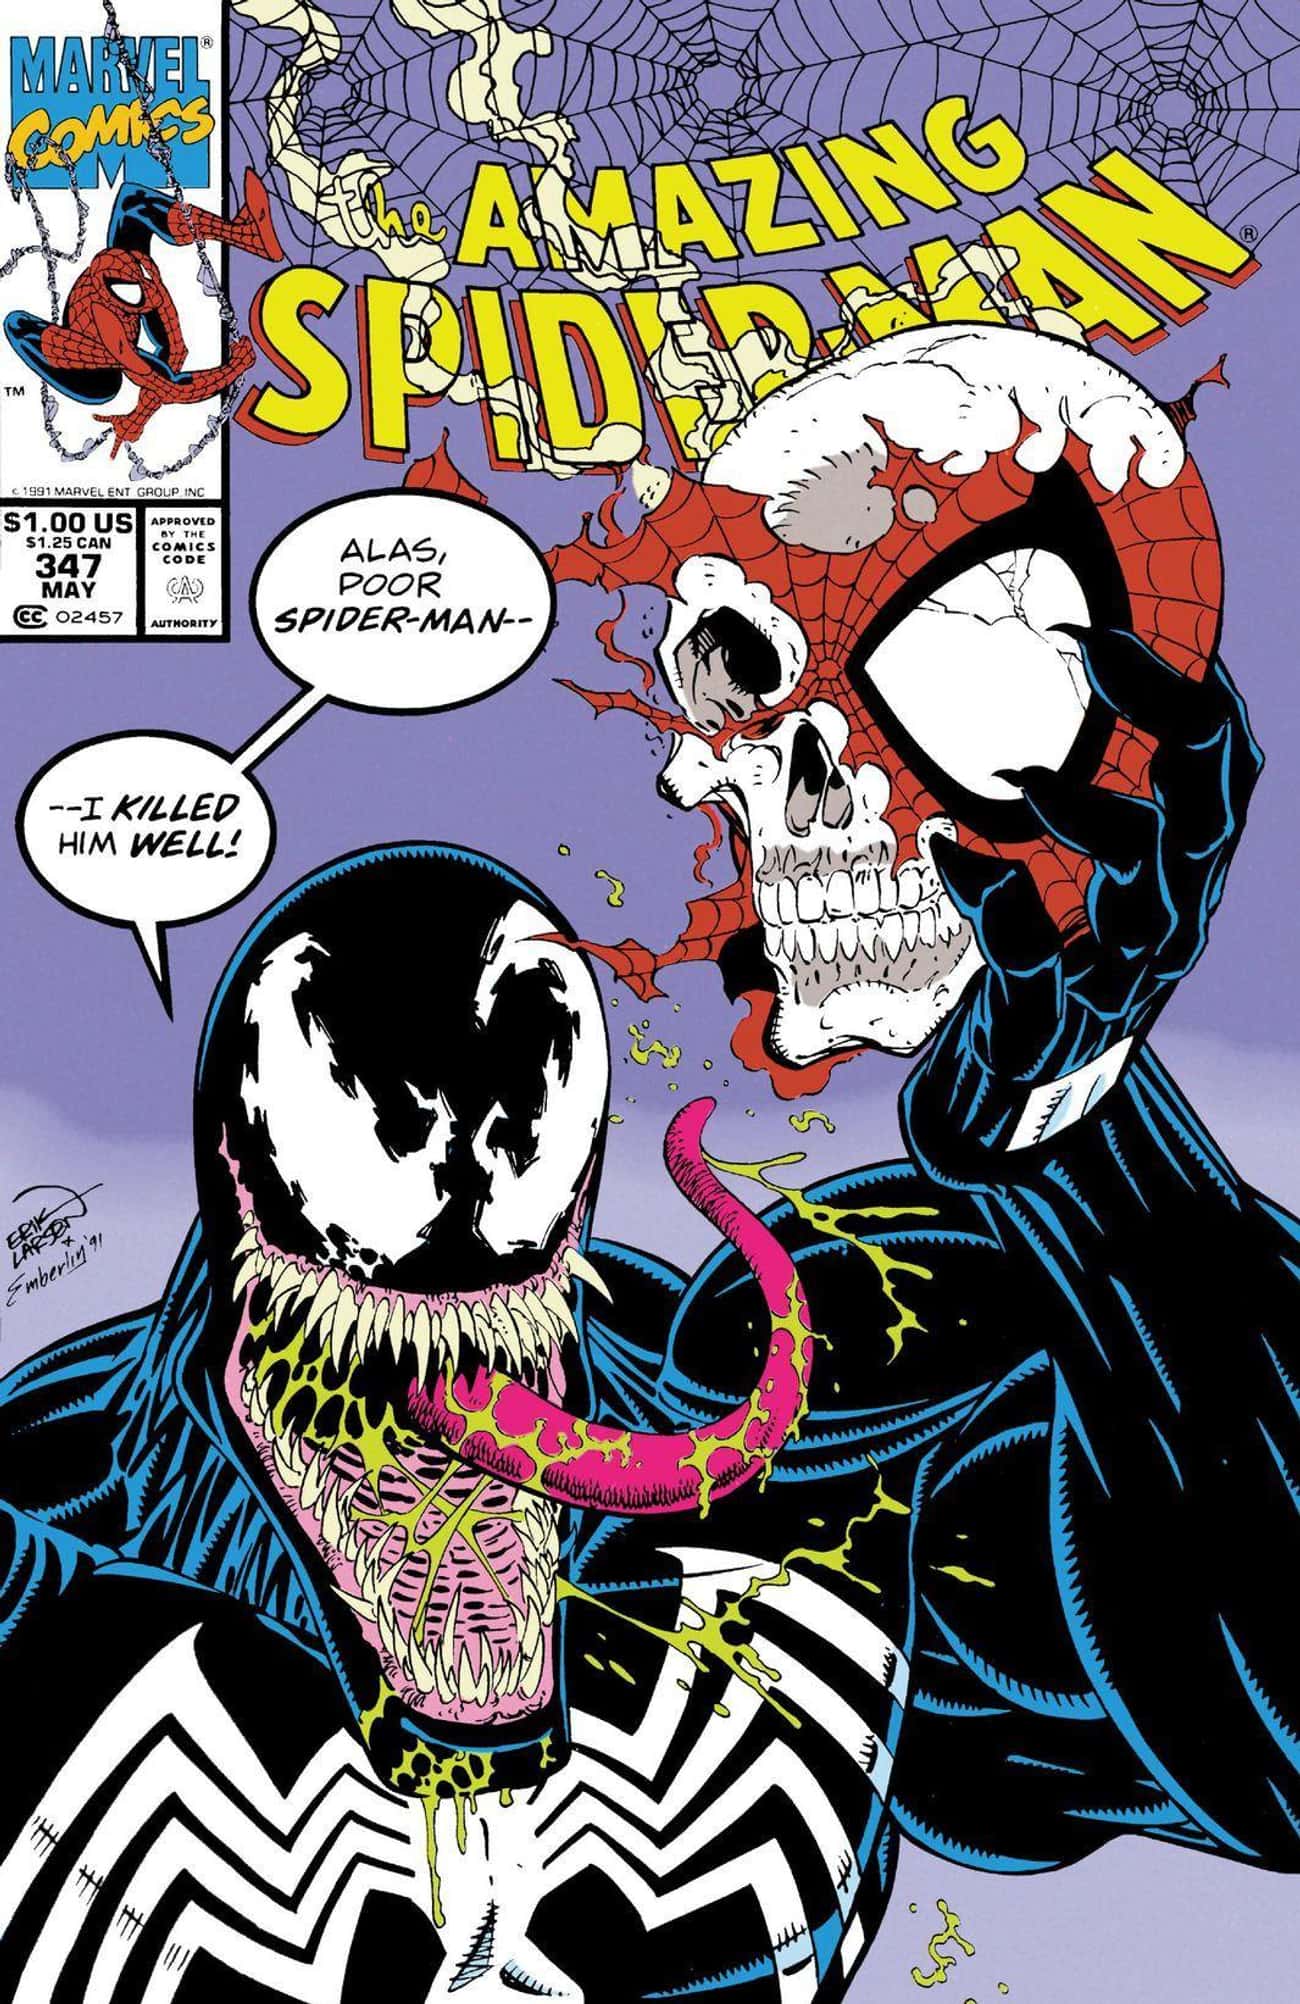 'The Amazing Spider-Man' #347